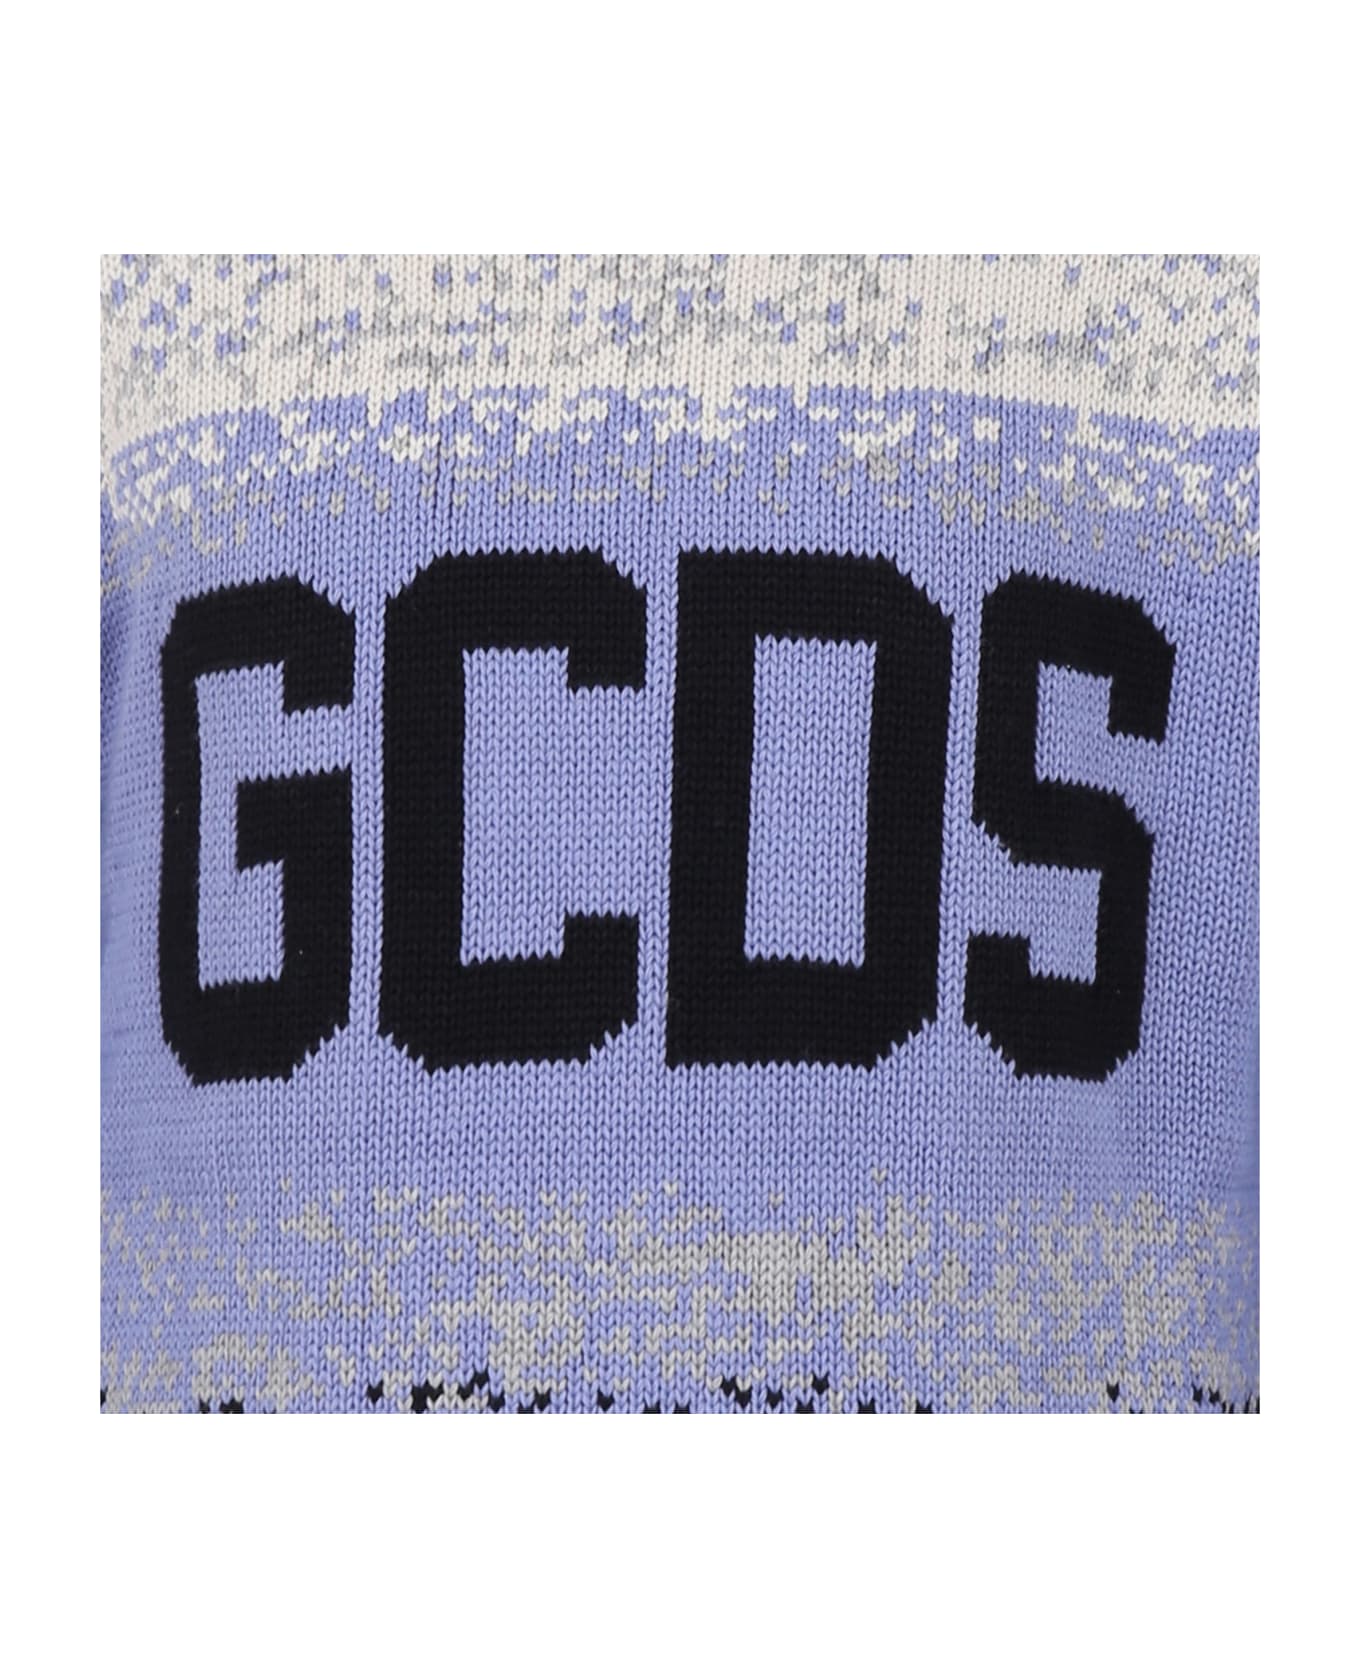 GCDS Mini Black Sweater For Boy With Logo - Black